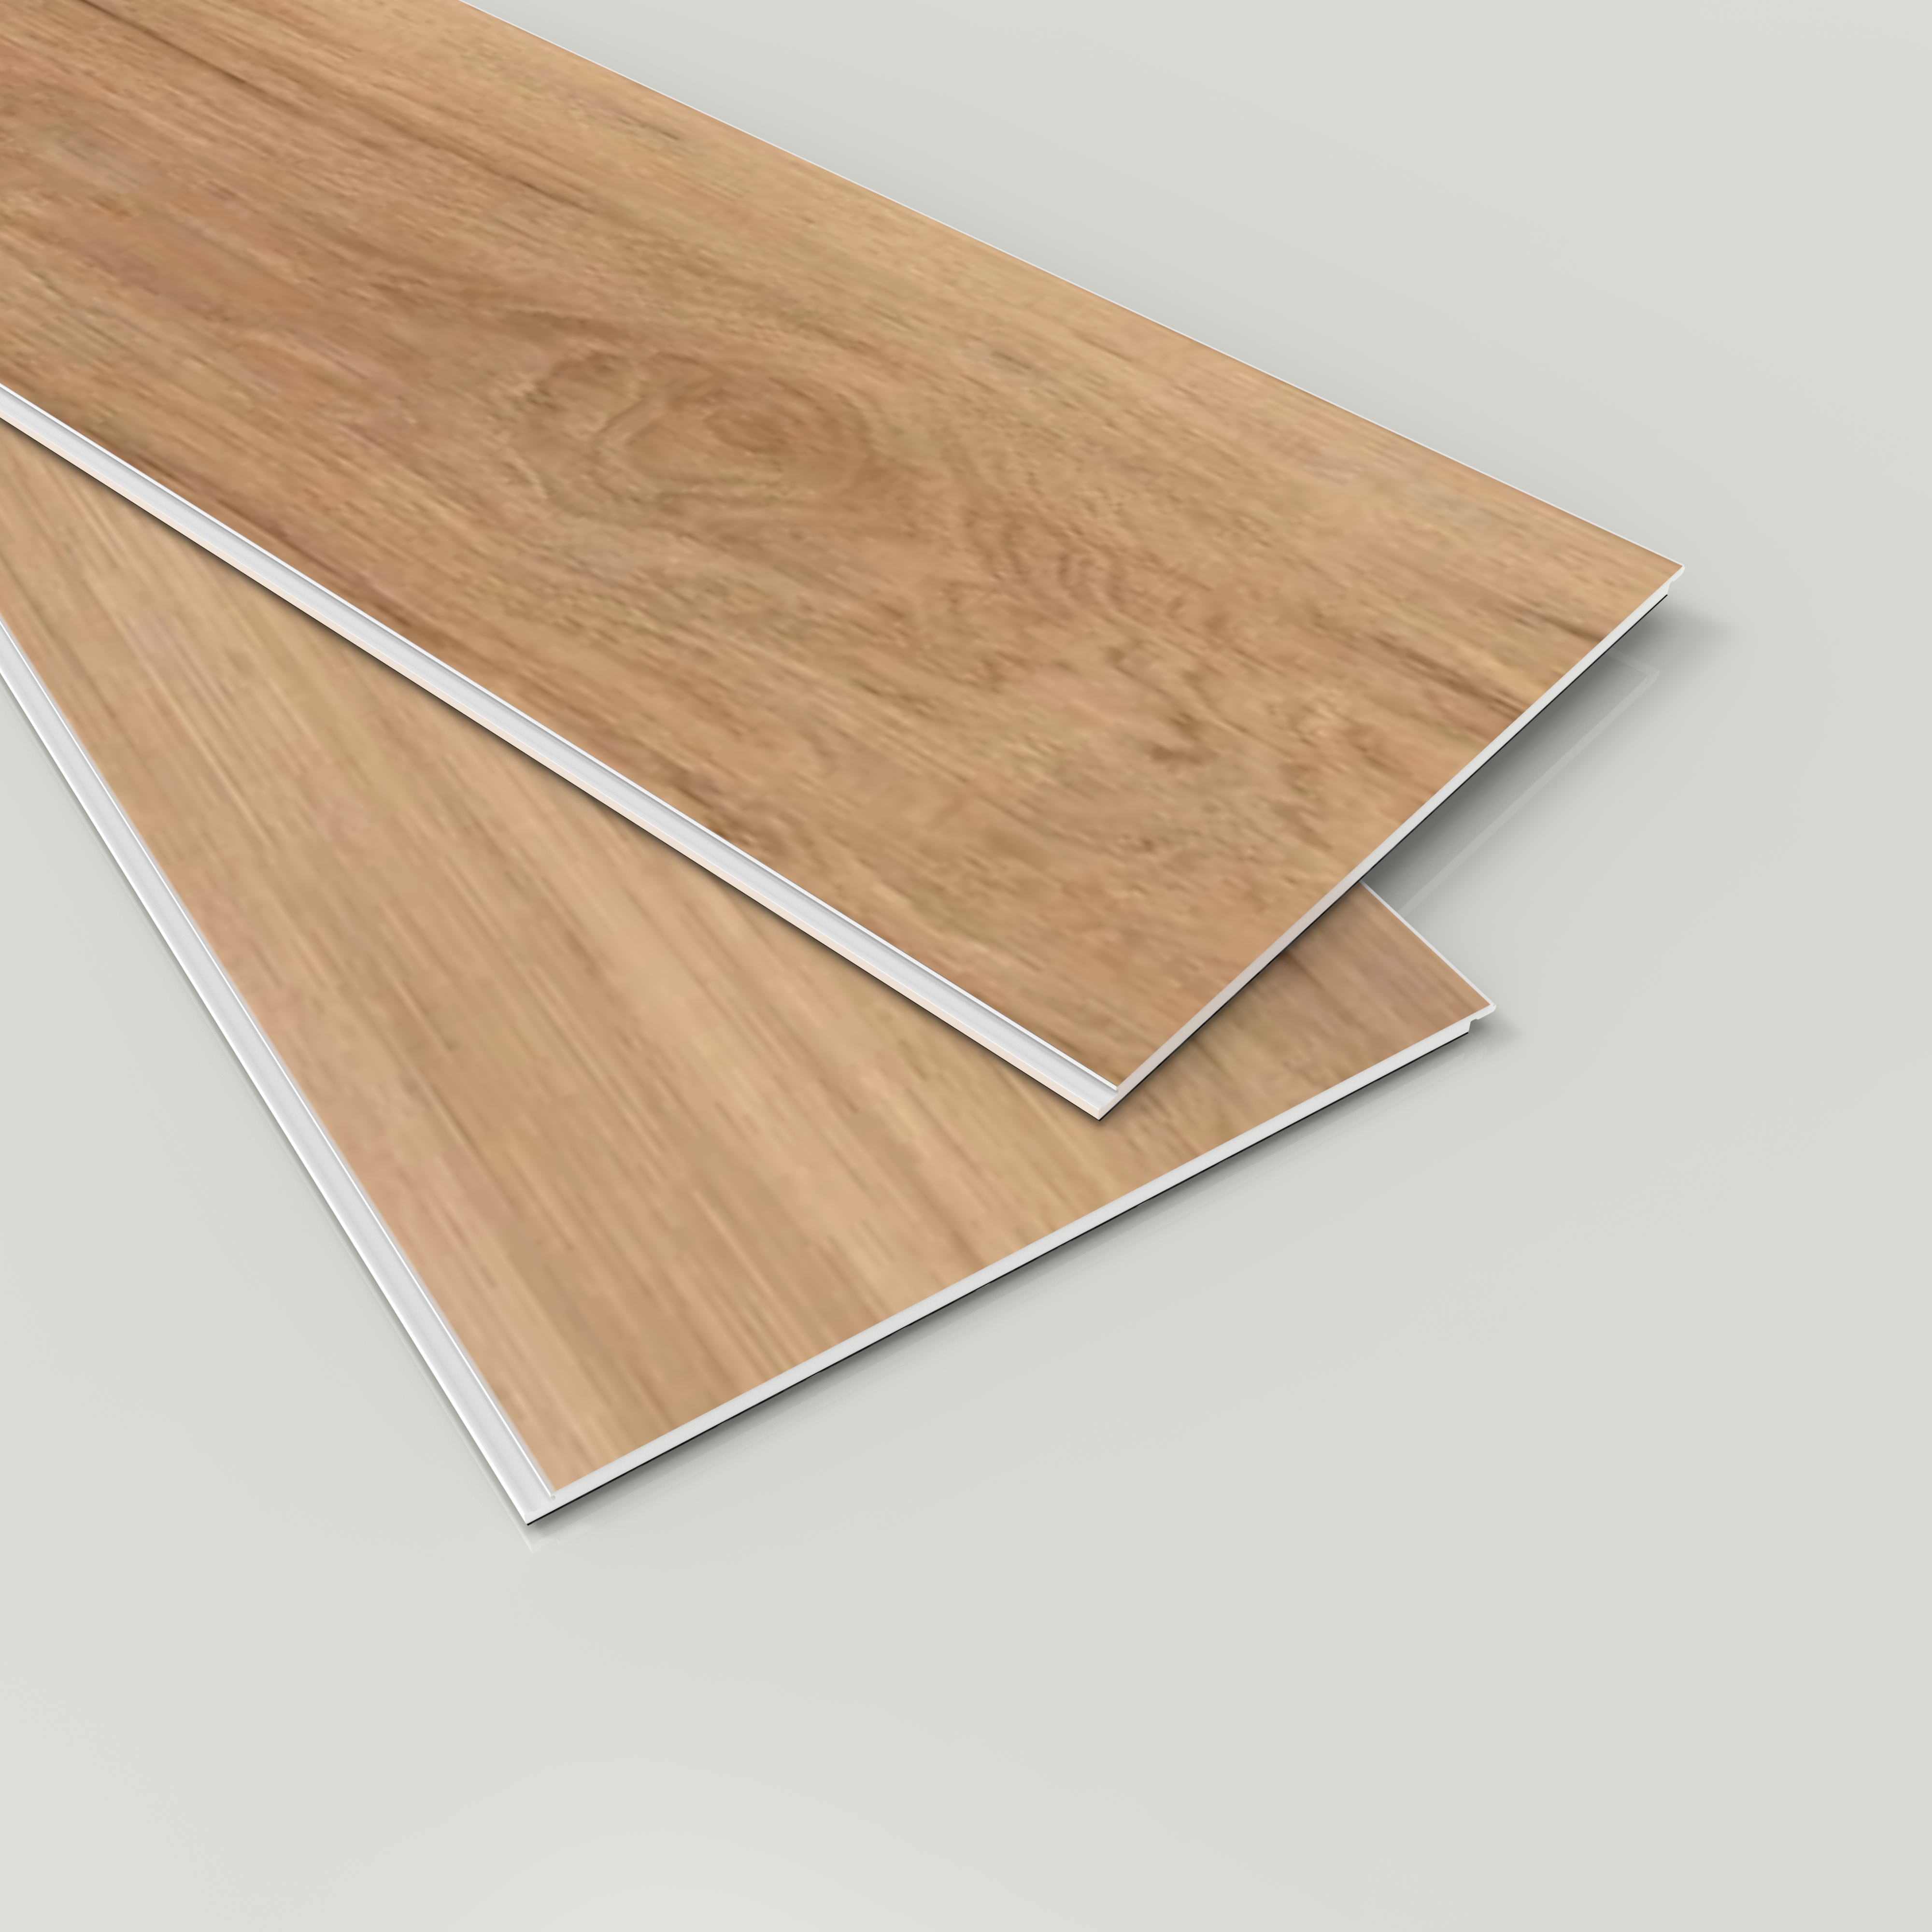 How To Install Vinyl Plank Flooring A